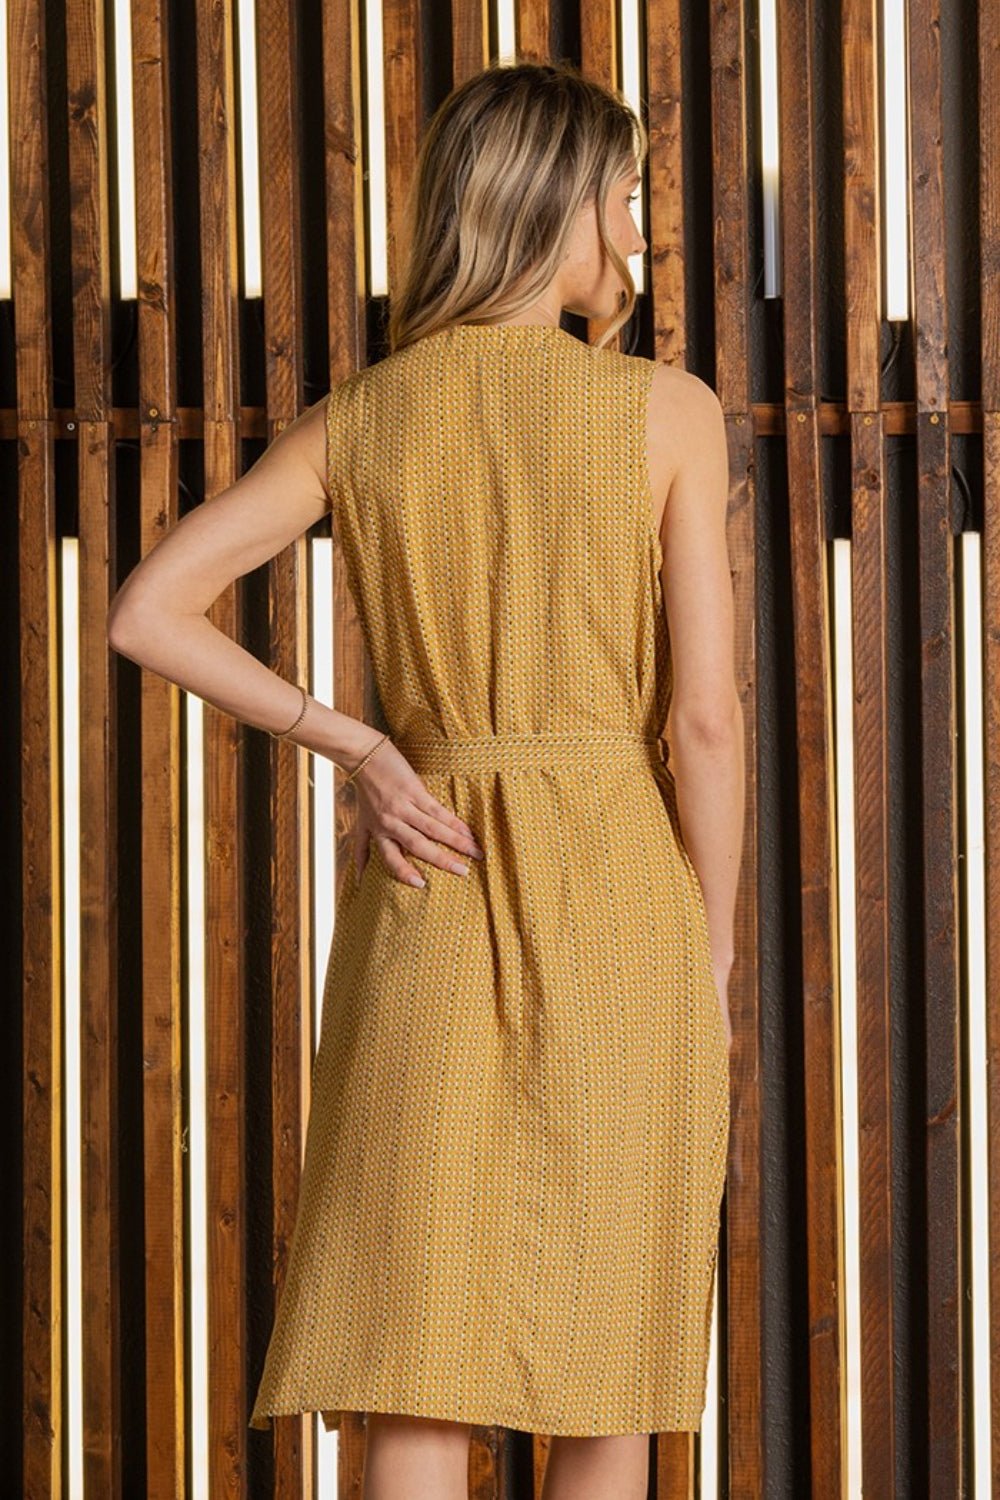 Printed Sleeveless Knee Length Dress with Pockets in Mustard BlueKnee-Length DressSew In Love